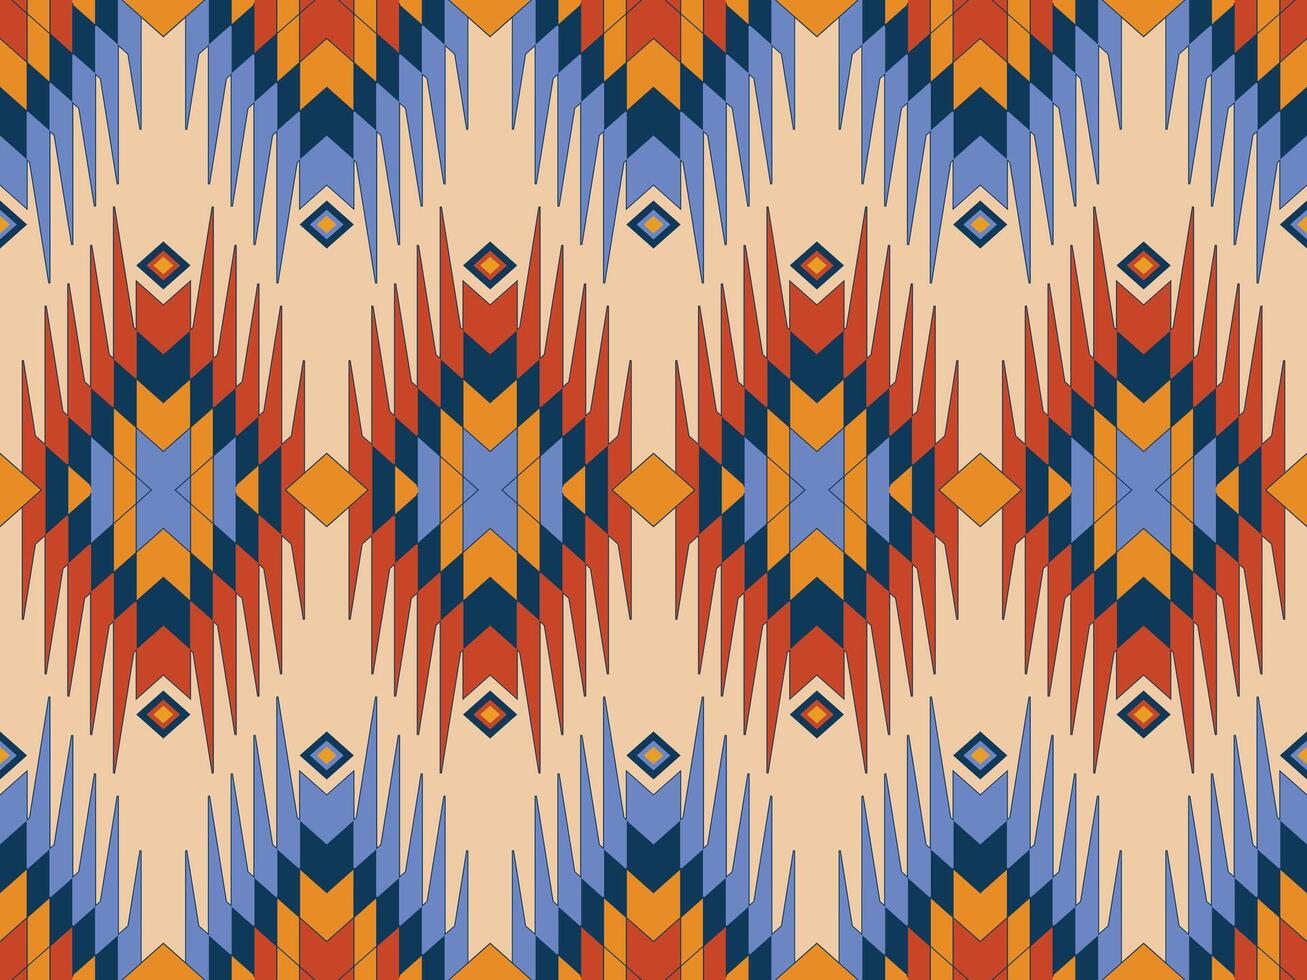 inföding amerikan indisk prydnad mönster geometrisk etnisk textil- textur stam- aztec mönster navajo mexikansk tyg sömlös dekoration mode vektor